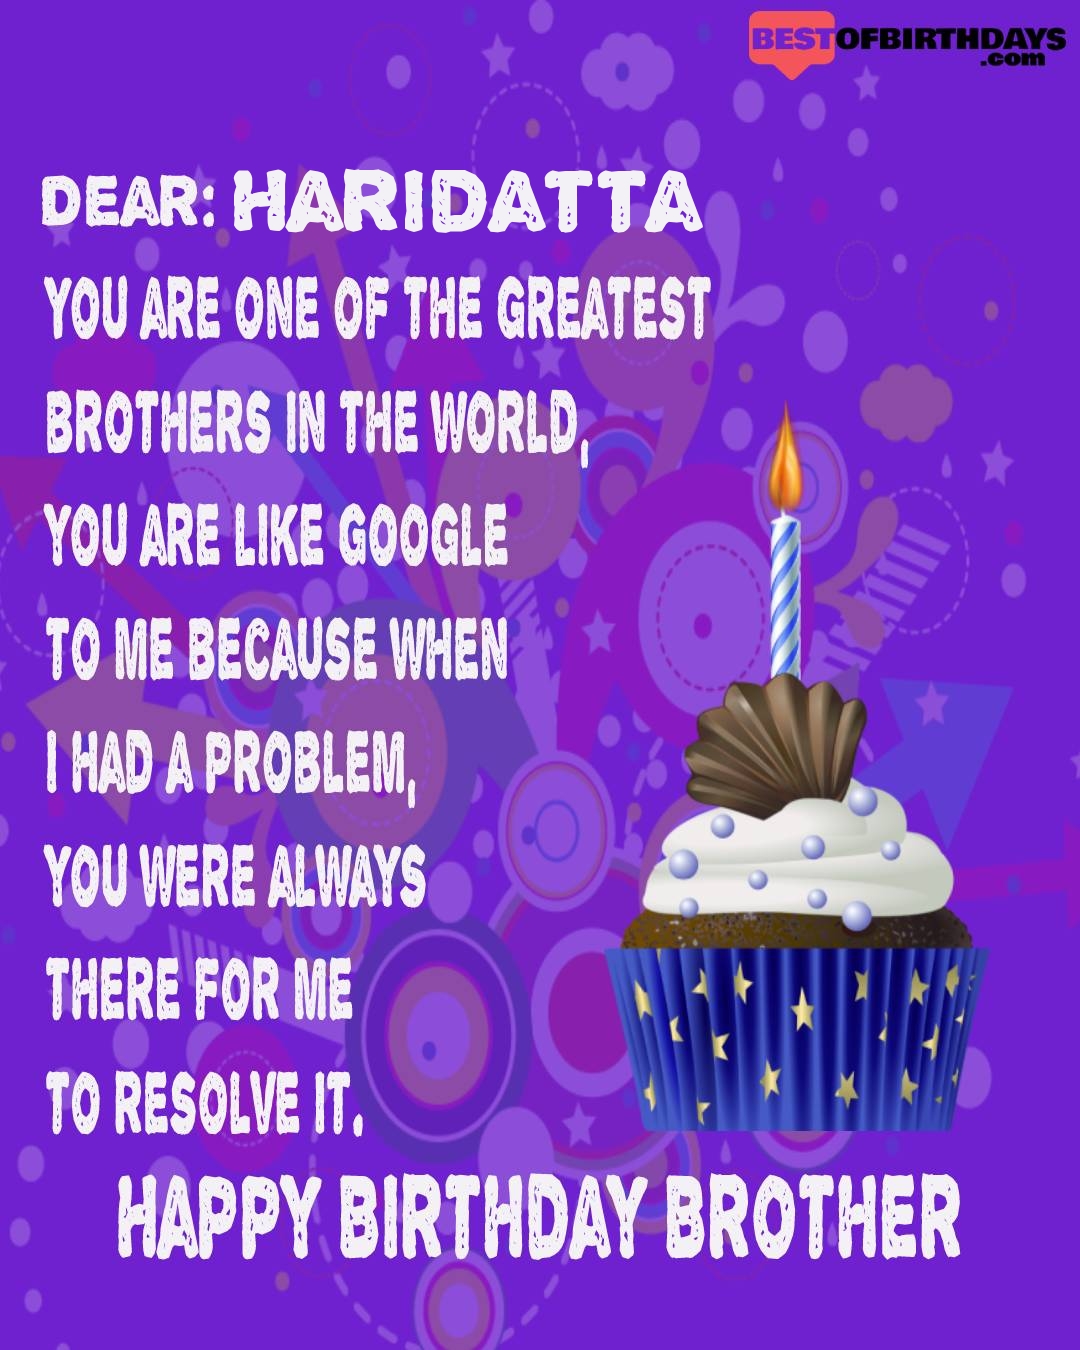 Happy birthday haridatta bhai brother bro